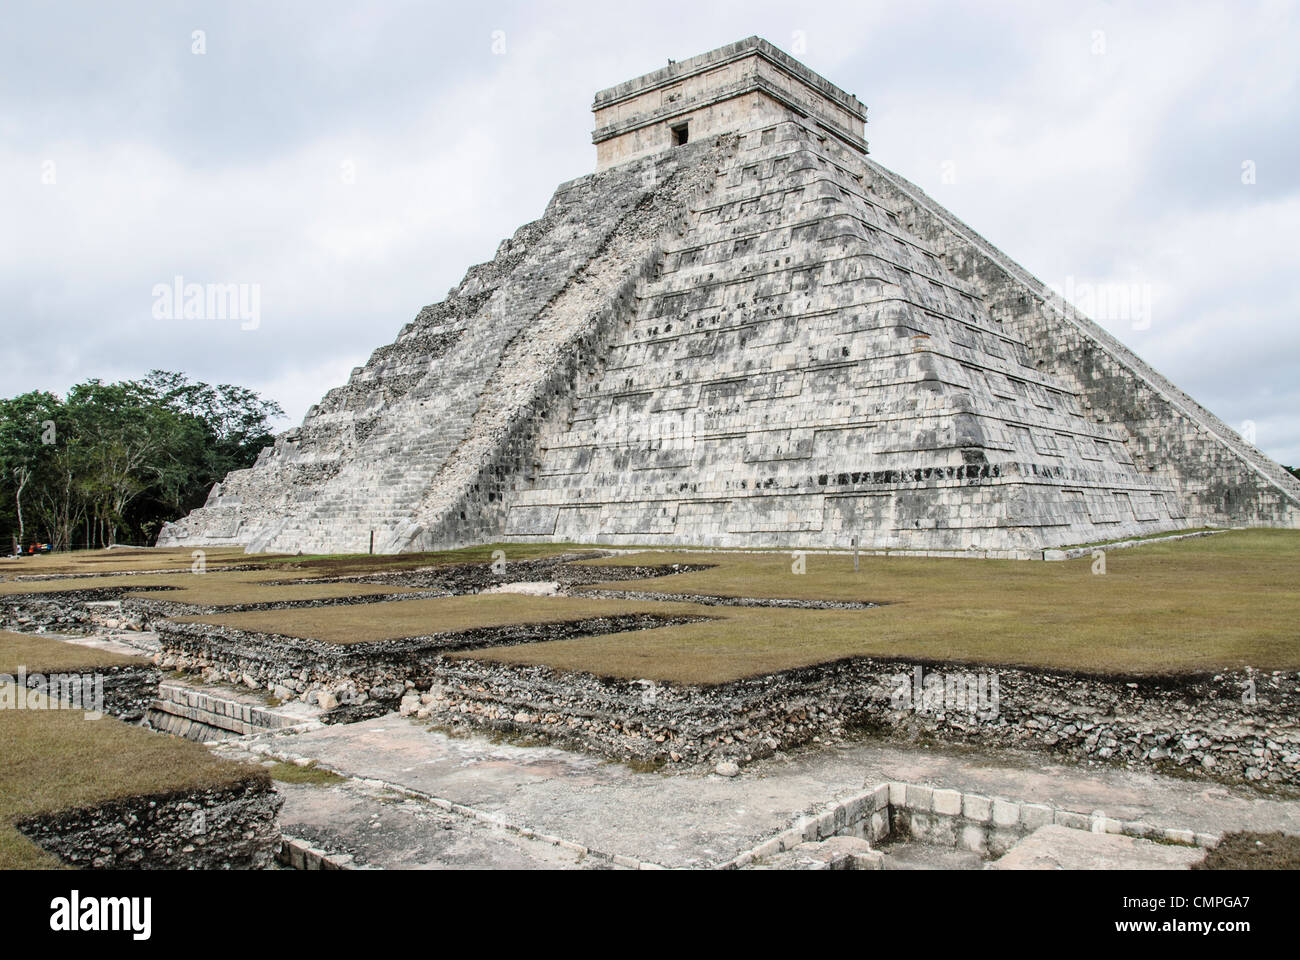 CHICHEN ITZA, Mexico - Pyramid of Temple of Kukulkan (El Castillo) at Chichen Itza Archeological Zone, ruins of a major Maya civilization city in the heart of Mexico's Yucatan Peninsula. Stock Photo